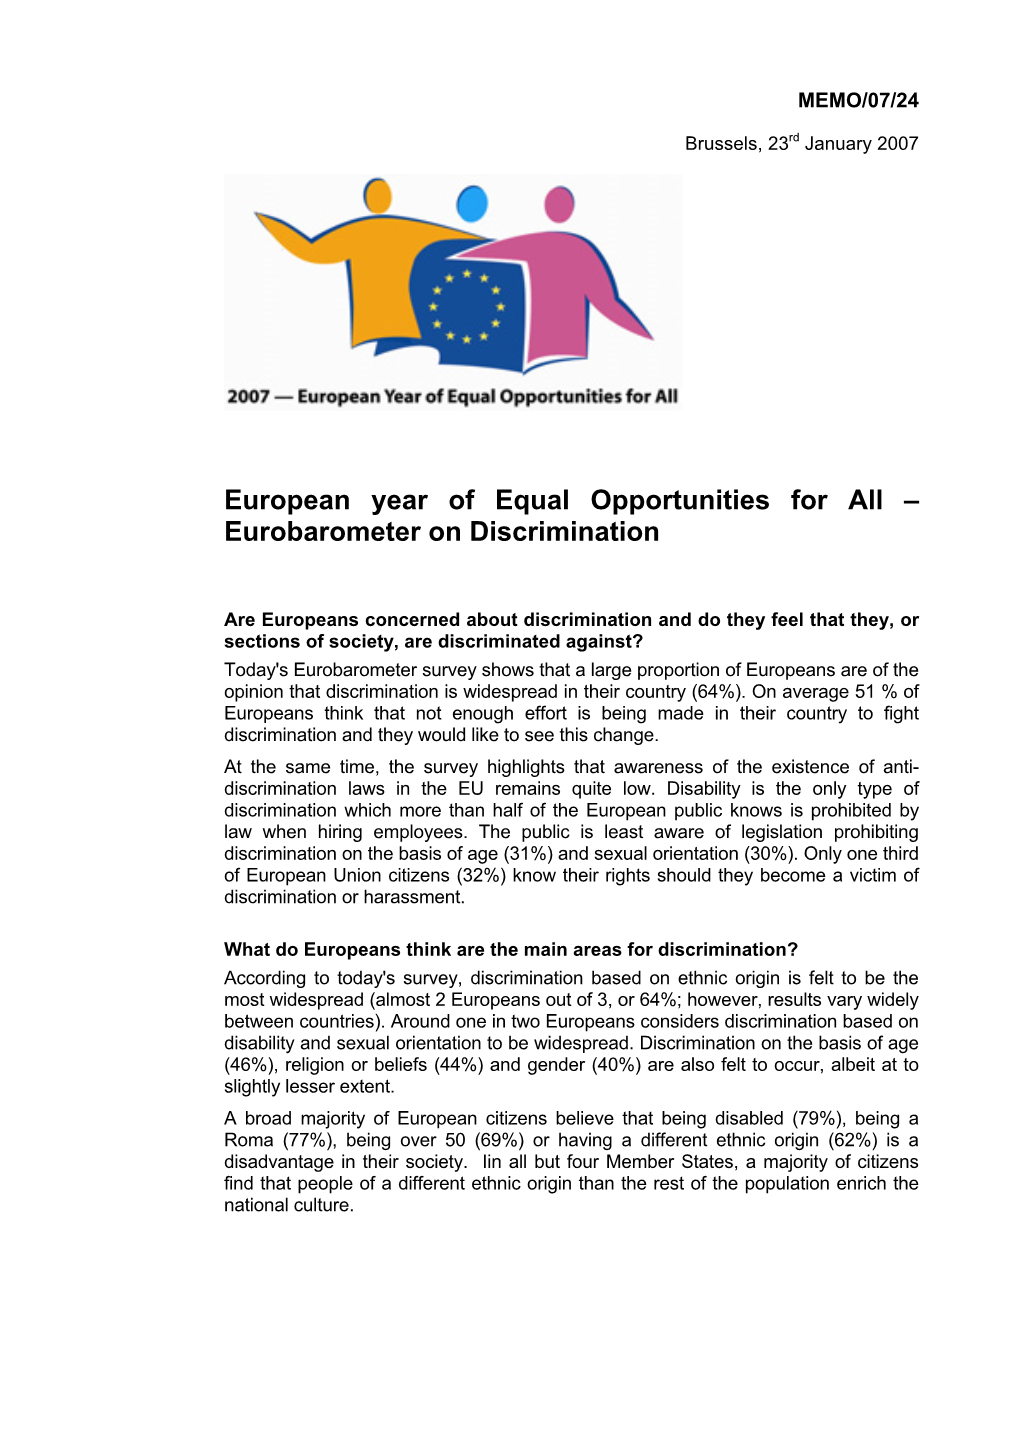 Eurobarometer on Discrimination